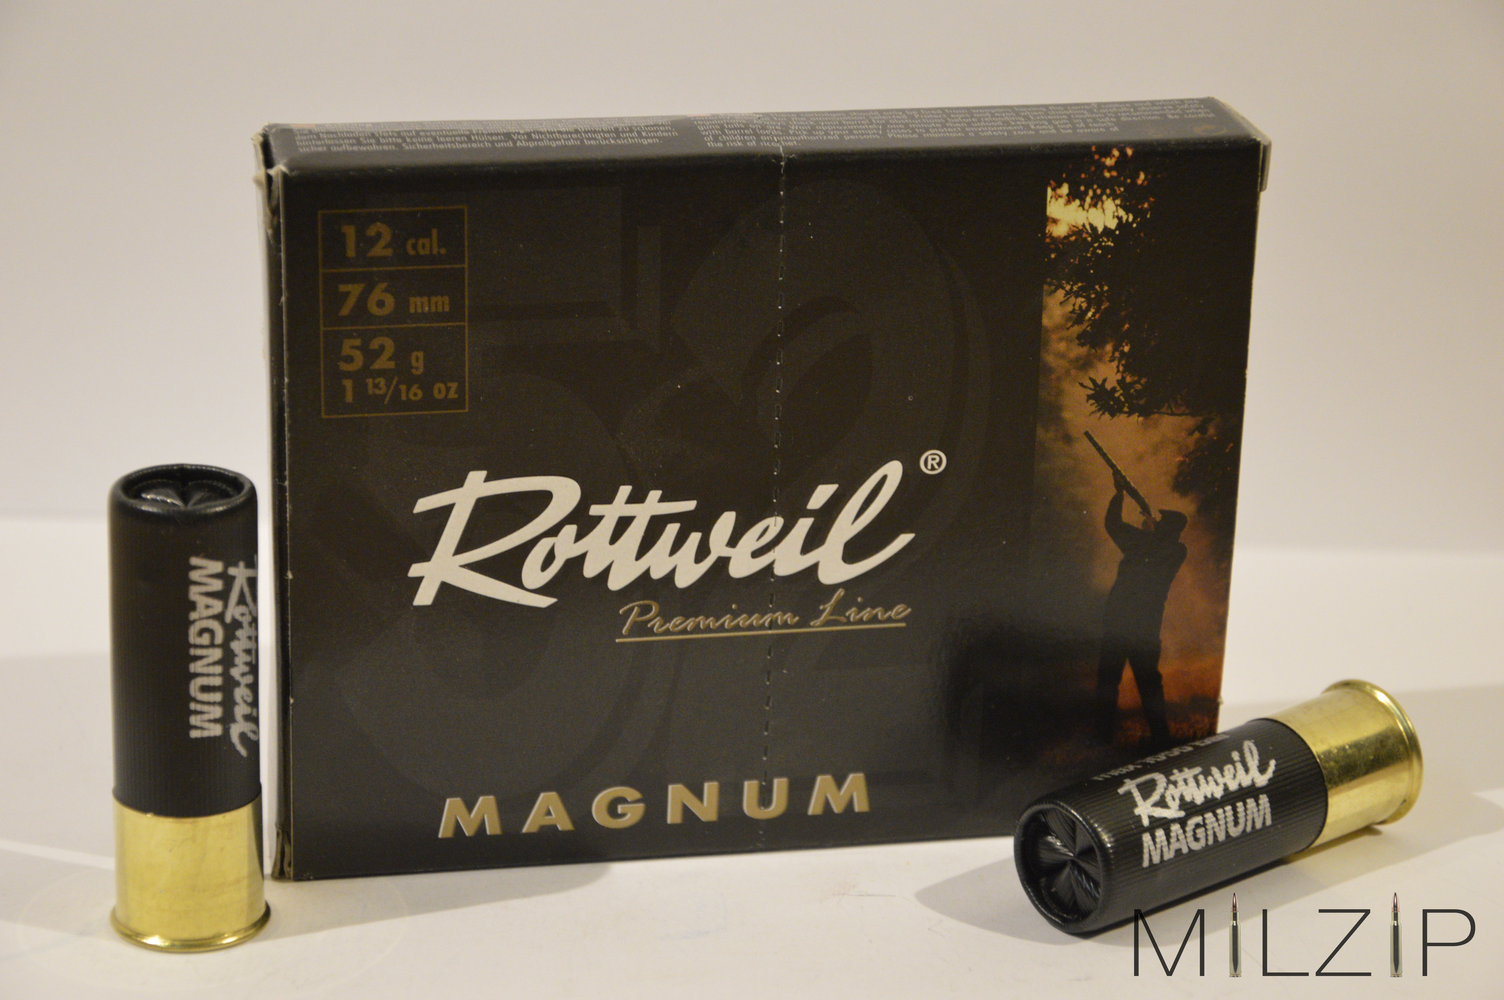 Rottweil Magnum 12/76 4,0mm 52g